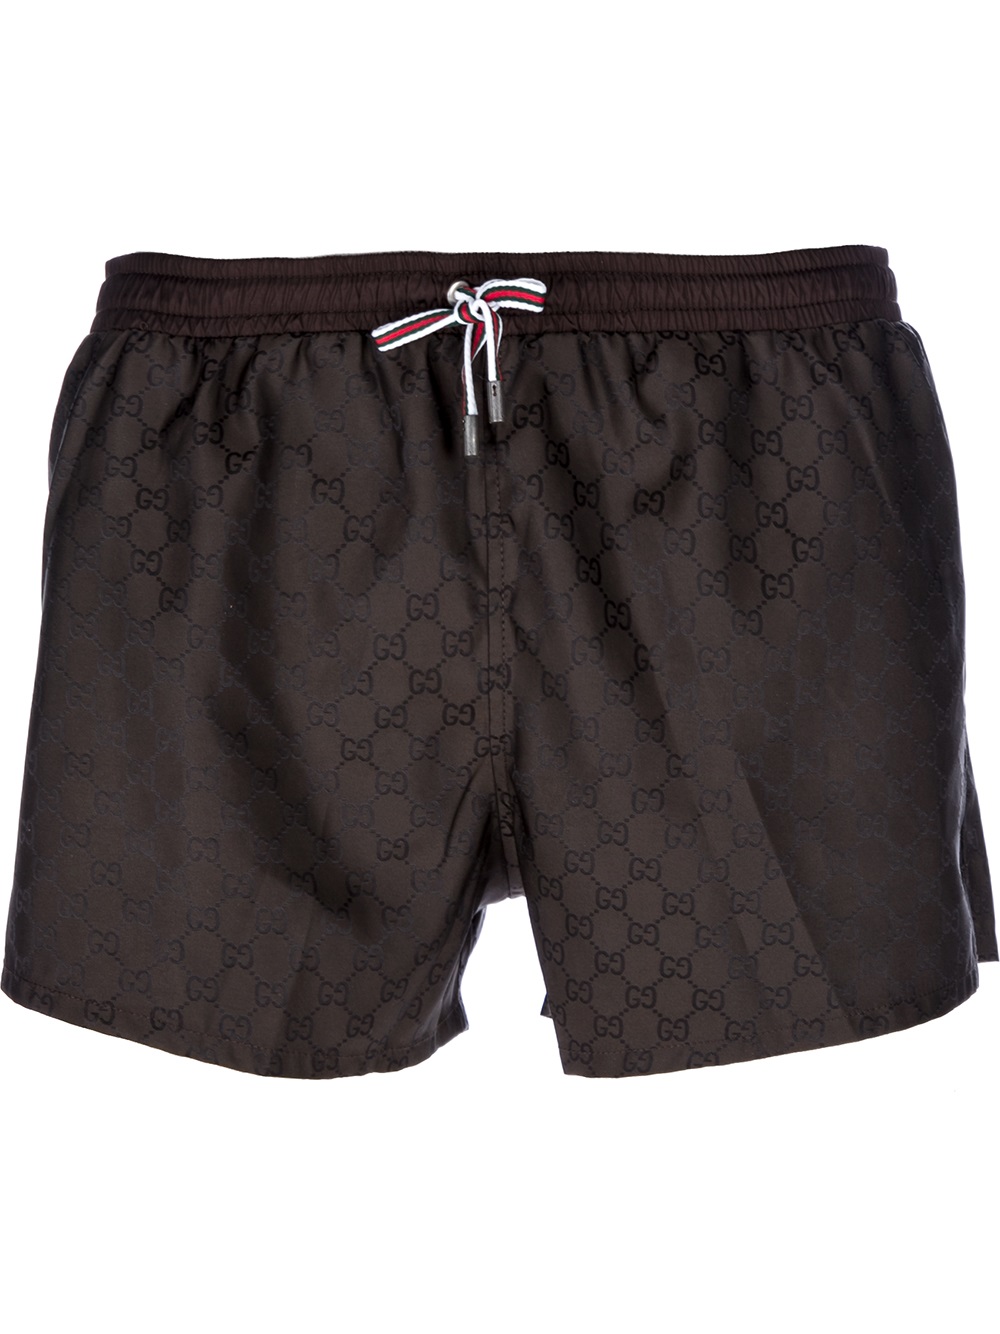 Lyst - Gucci Monogram Swim Shorts in Black for Men